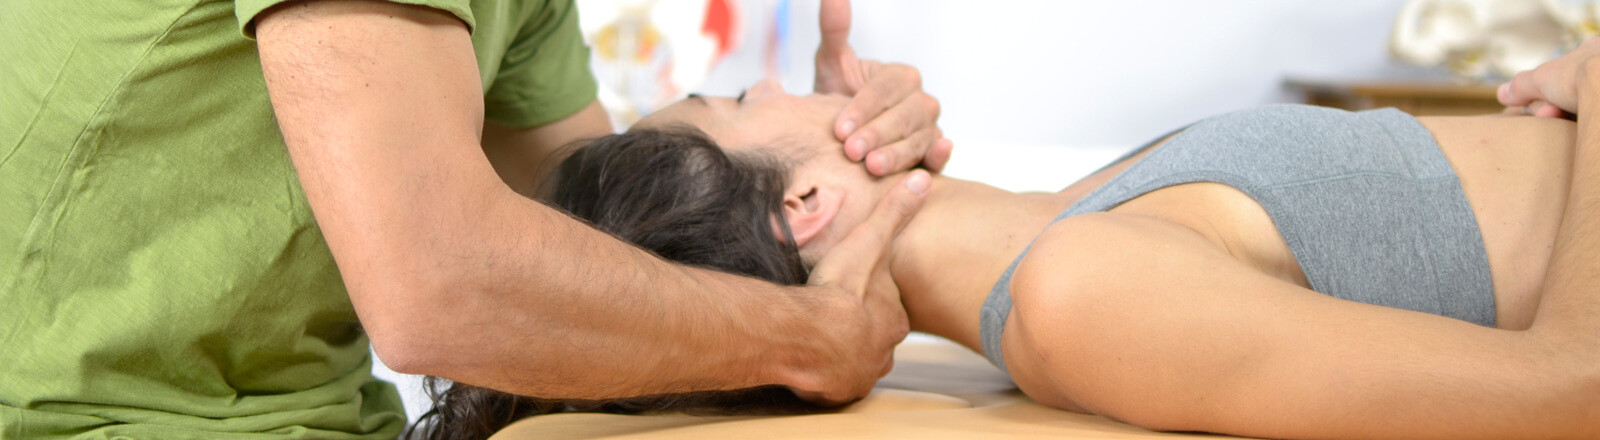 terapia manual fisioterapia